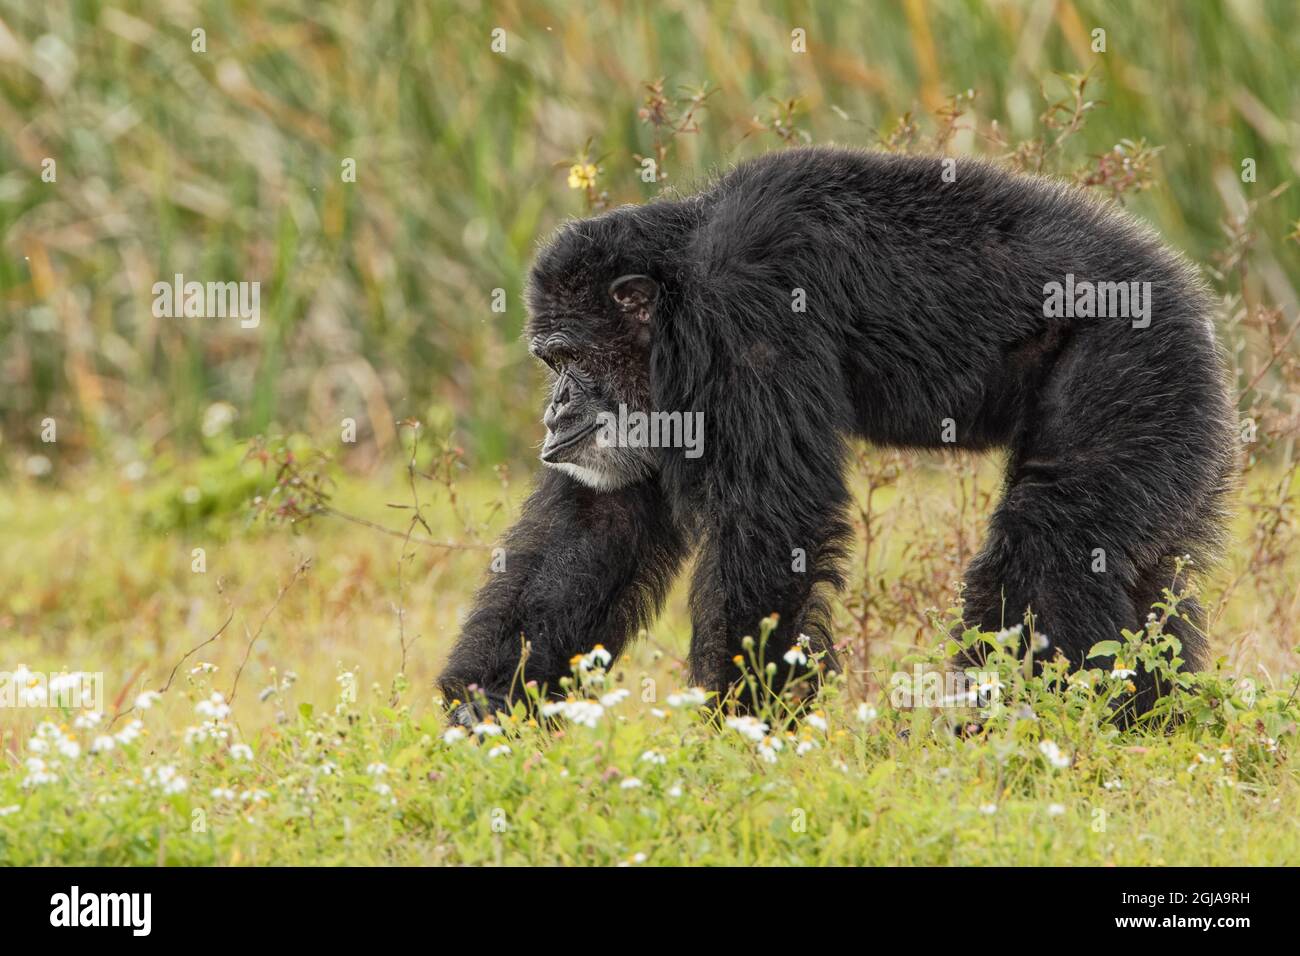 Adult male Chimpanzee, Pan troglodytes Stock Photo